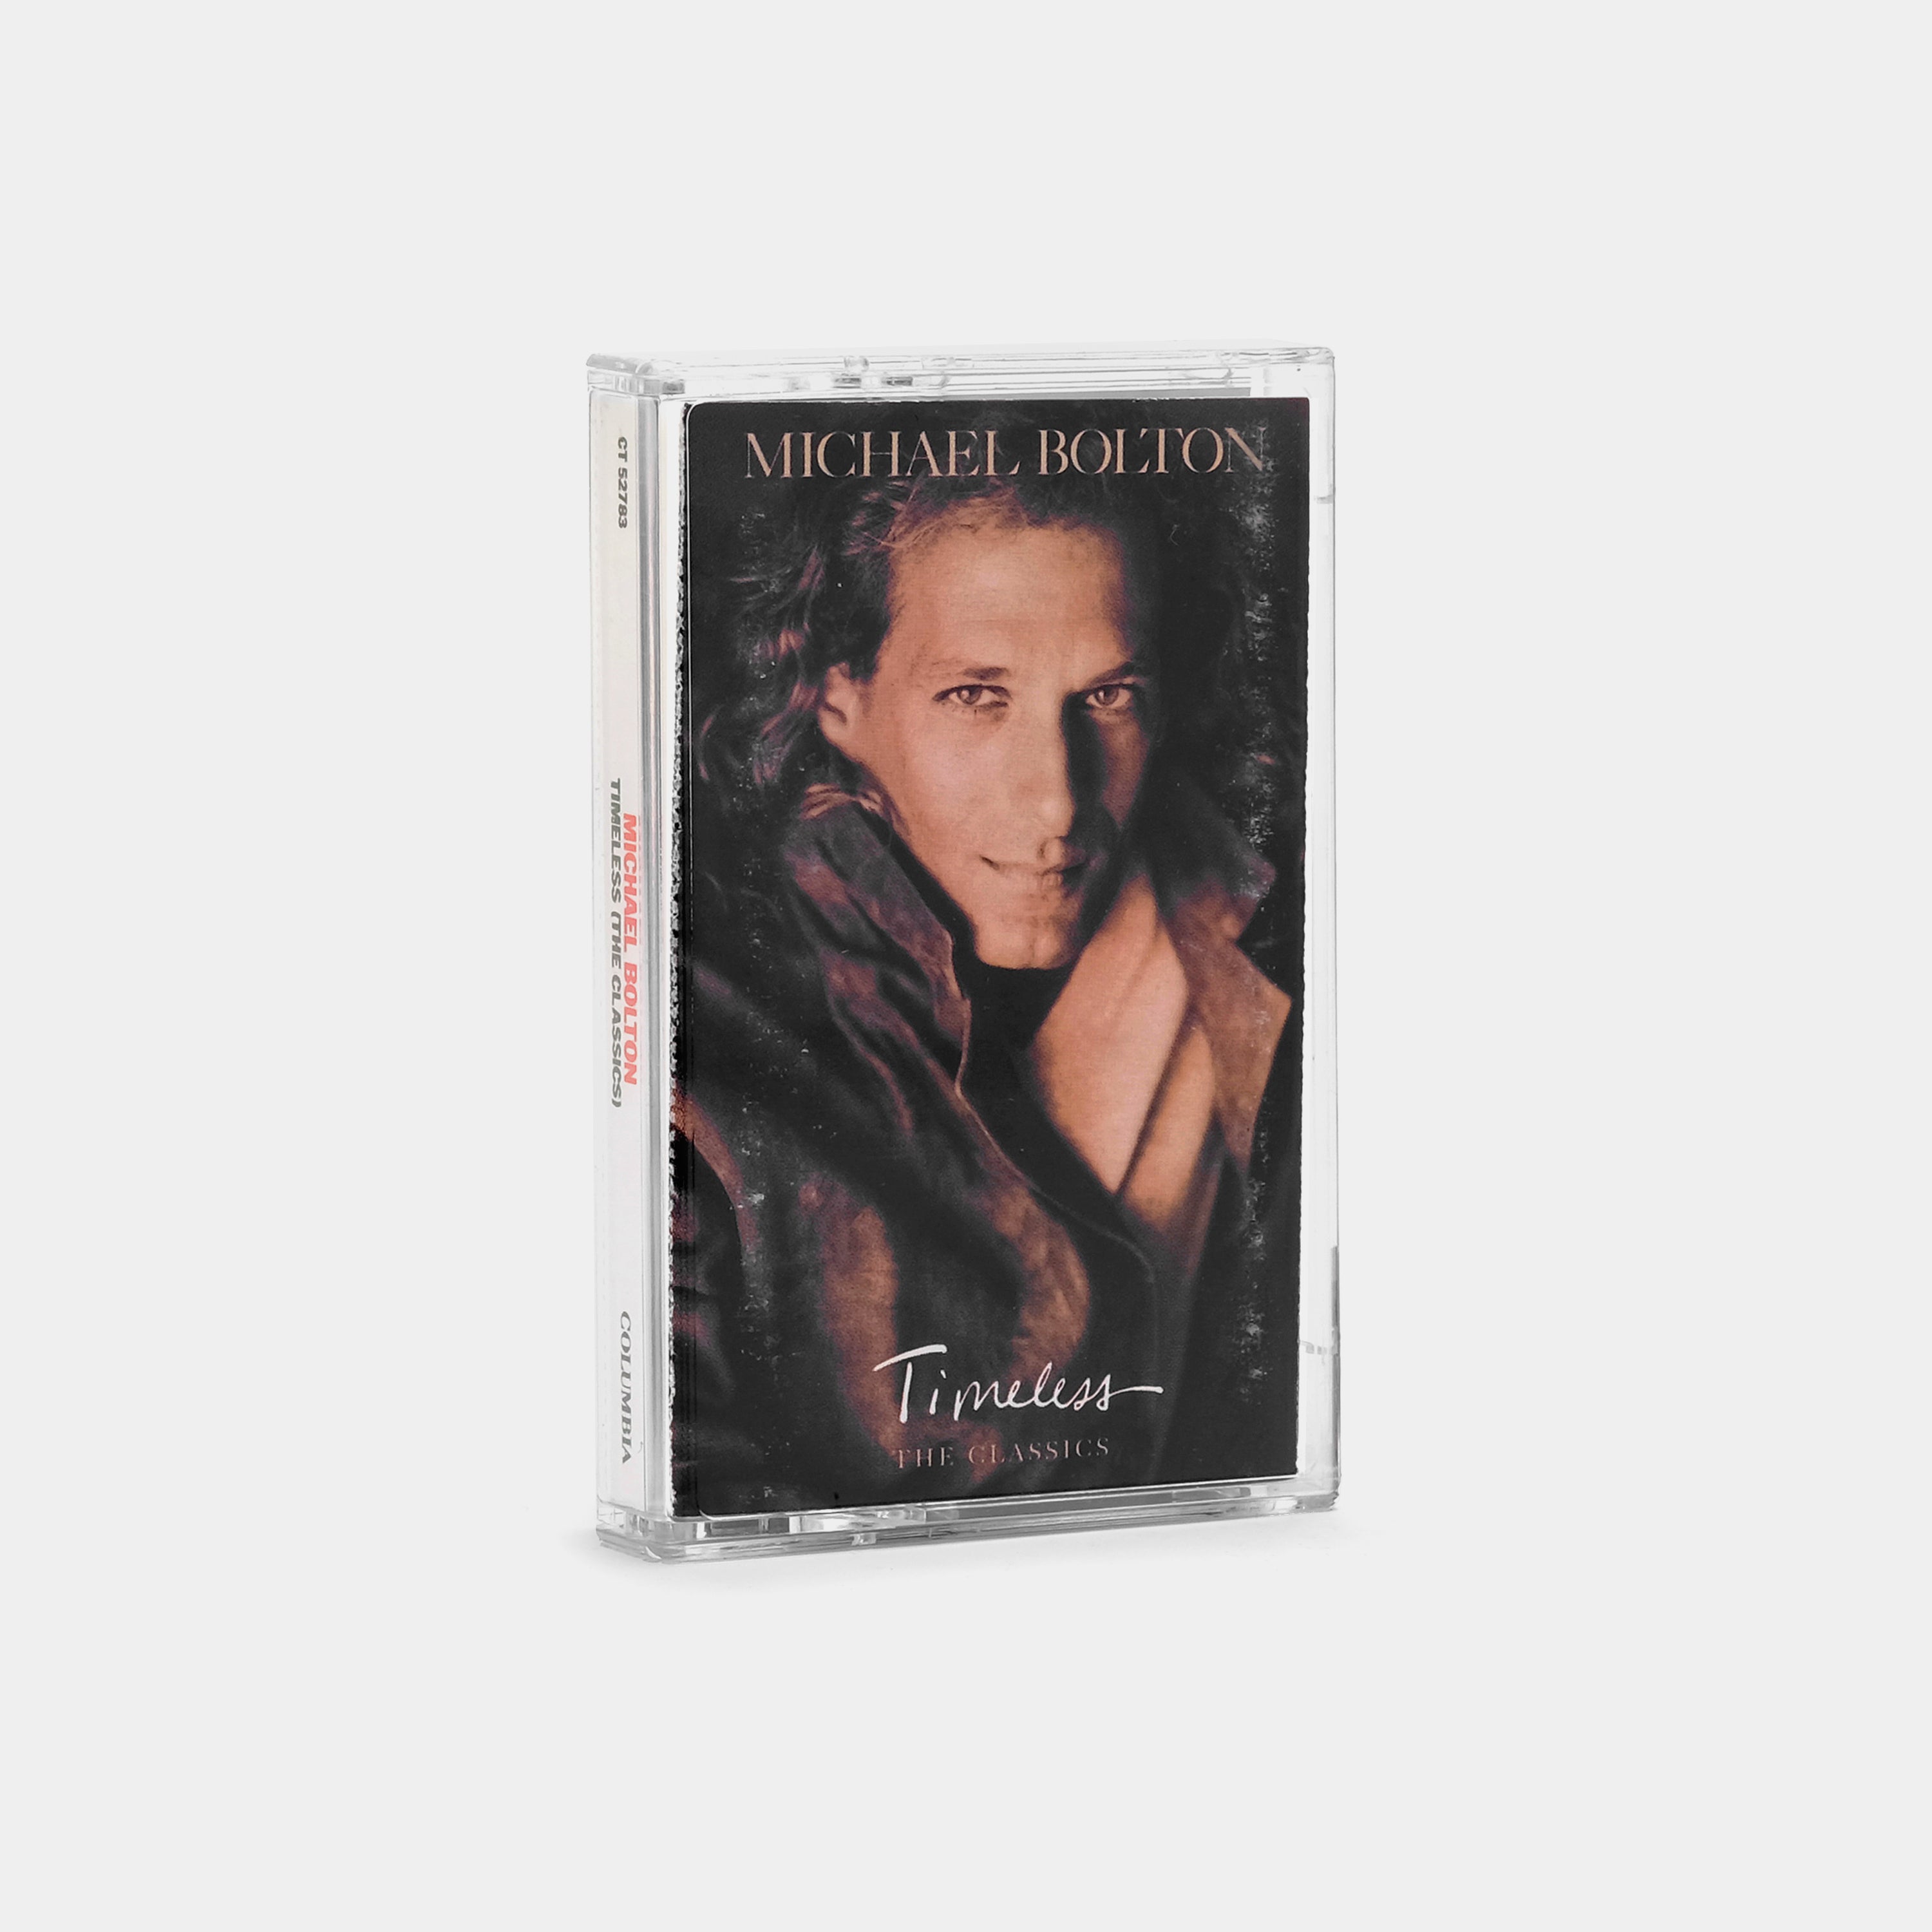 Michael Bolton - Timeless (The Classics) Cassette Tape